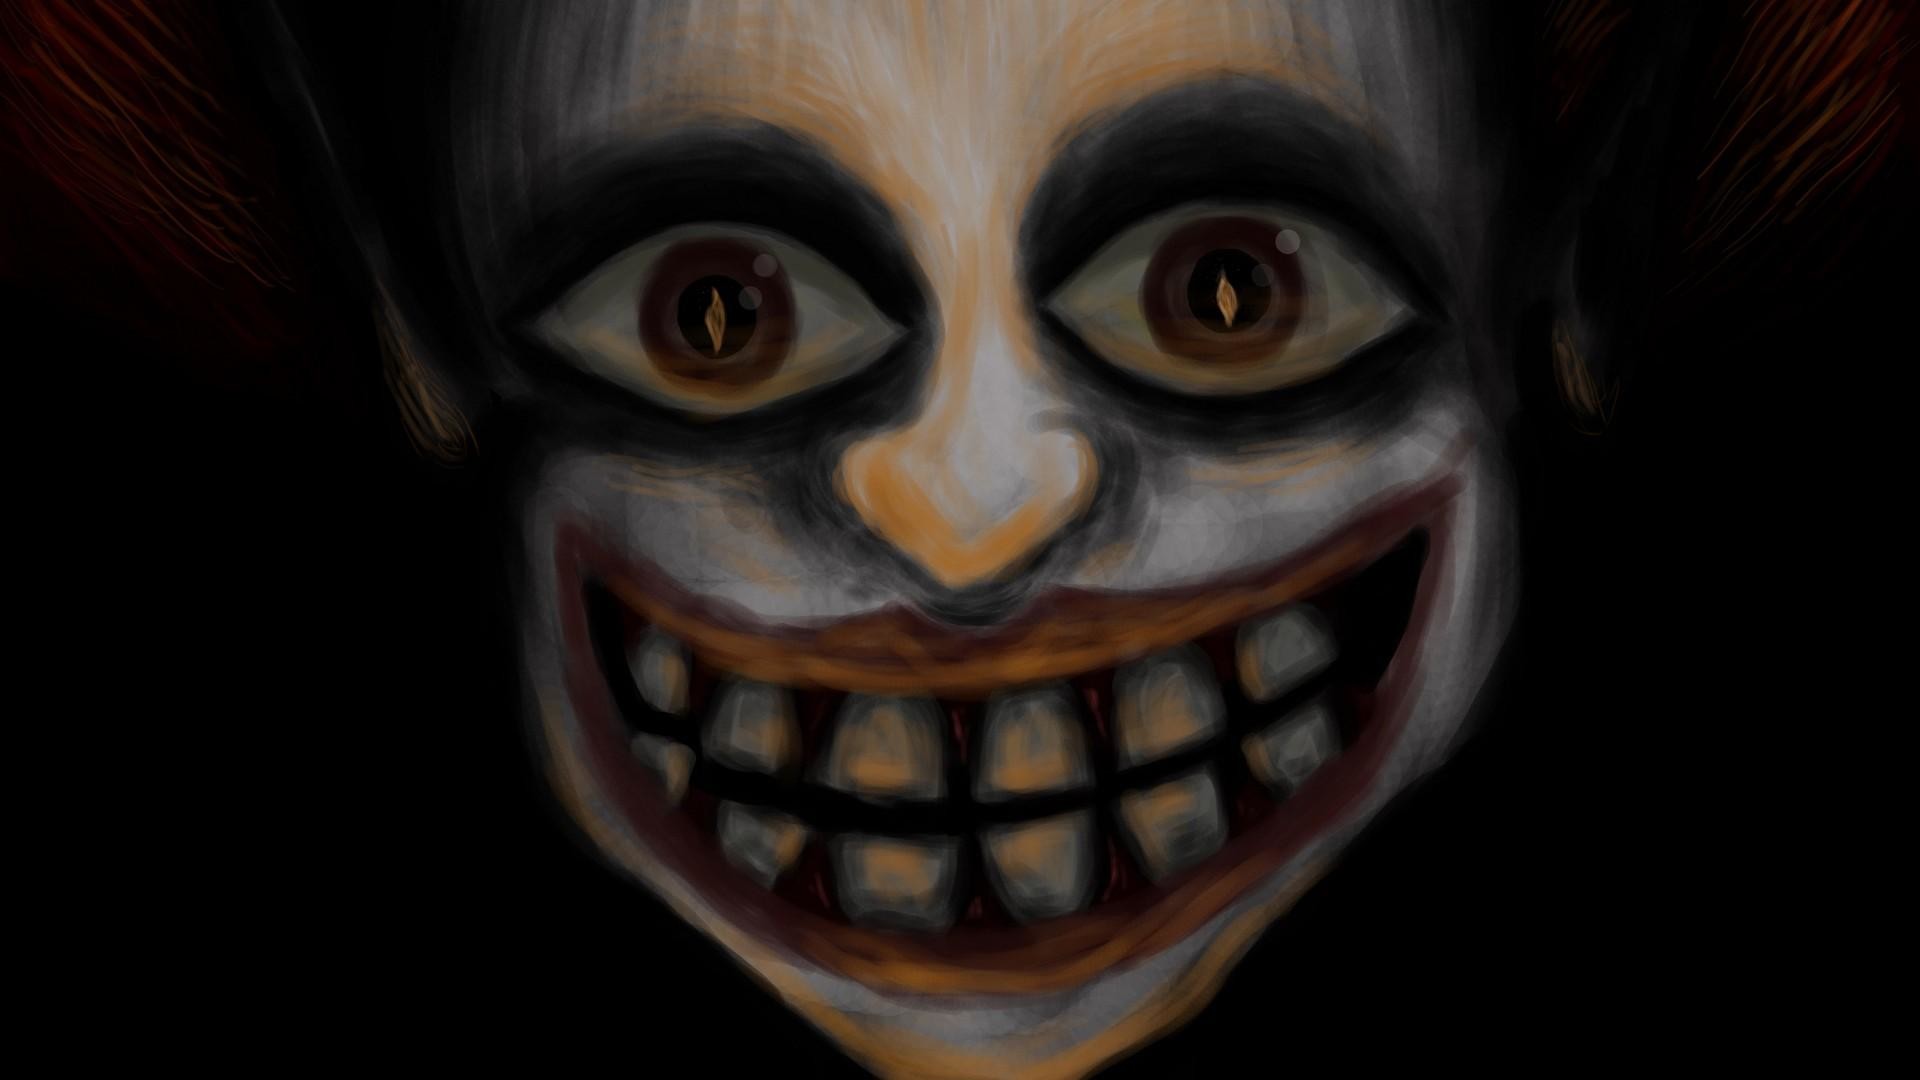 1920x1080 Creepy clown art image wallpaper